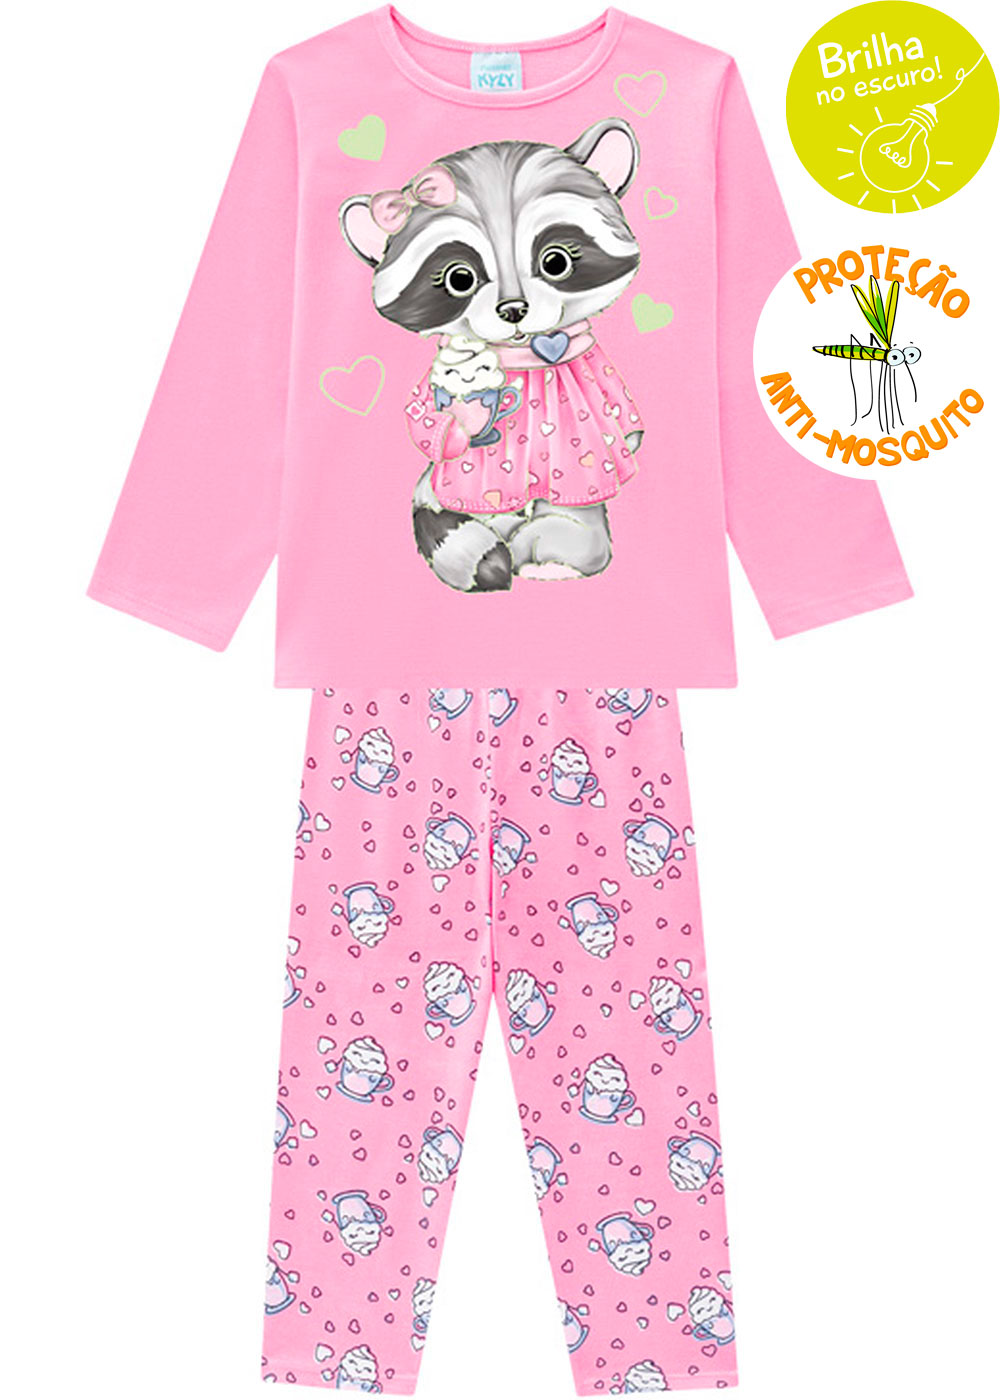 Pijama Infantil Feminino Anti-Mosquito Rosa que Brilha no Escuro Inverno Kyly